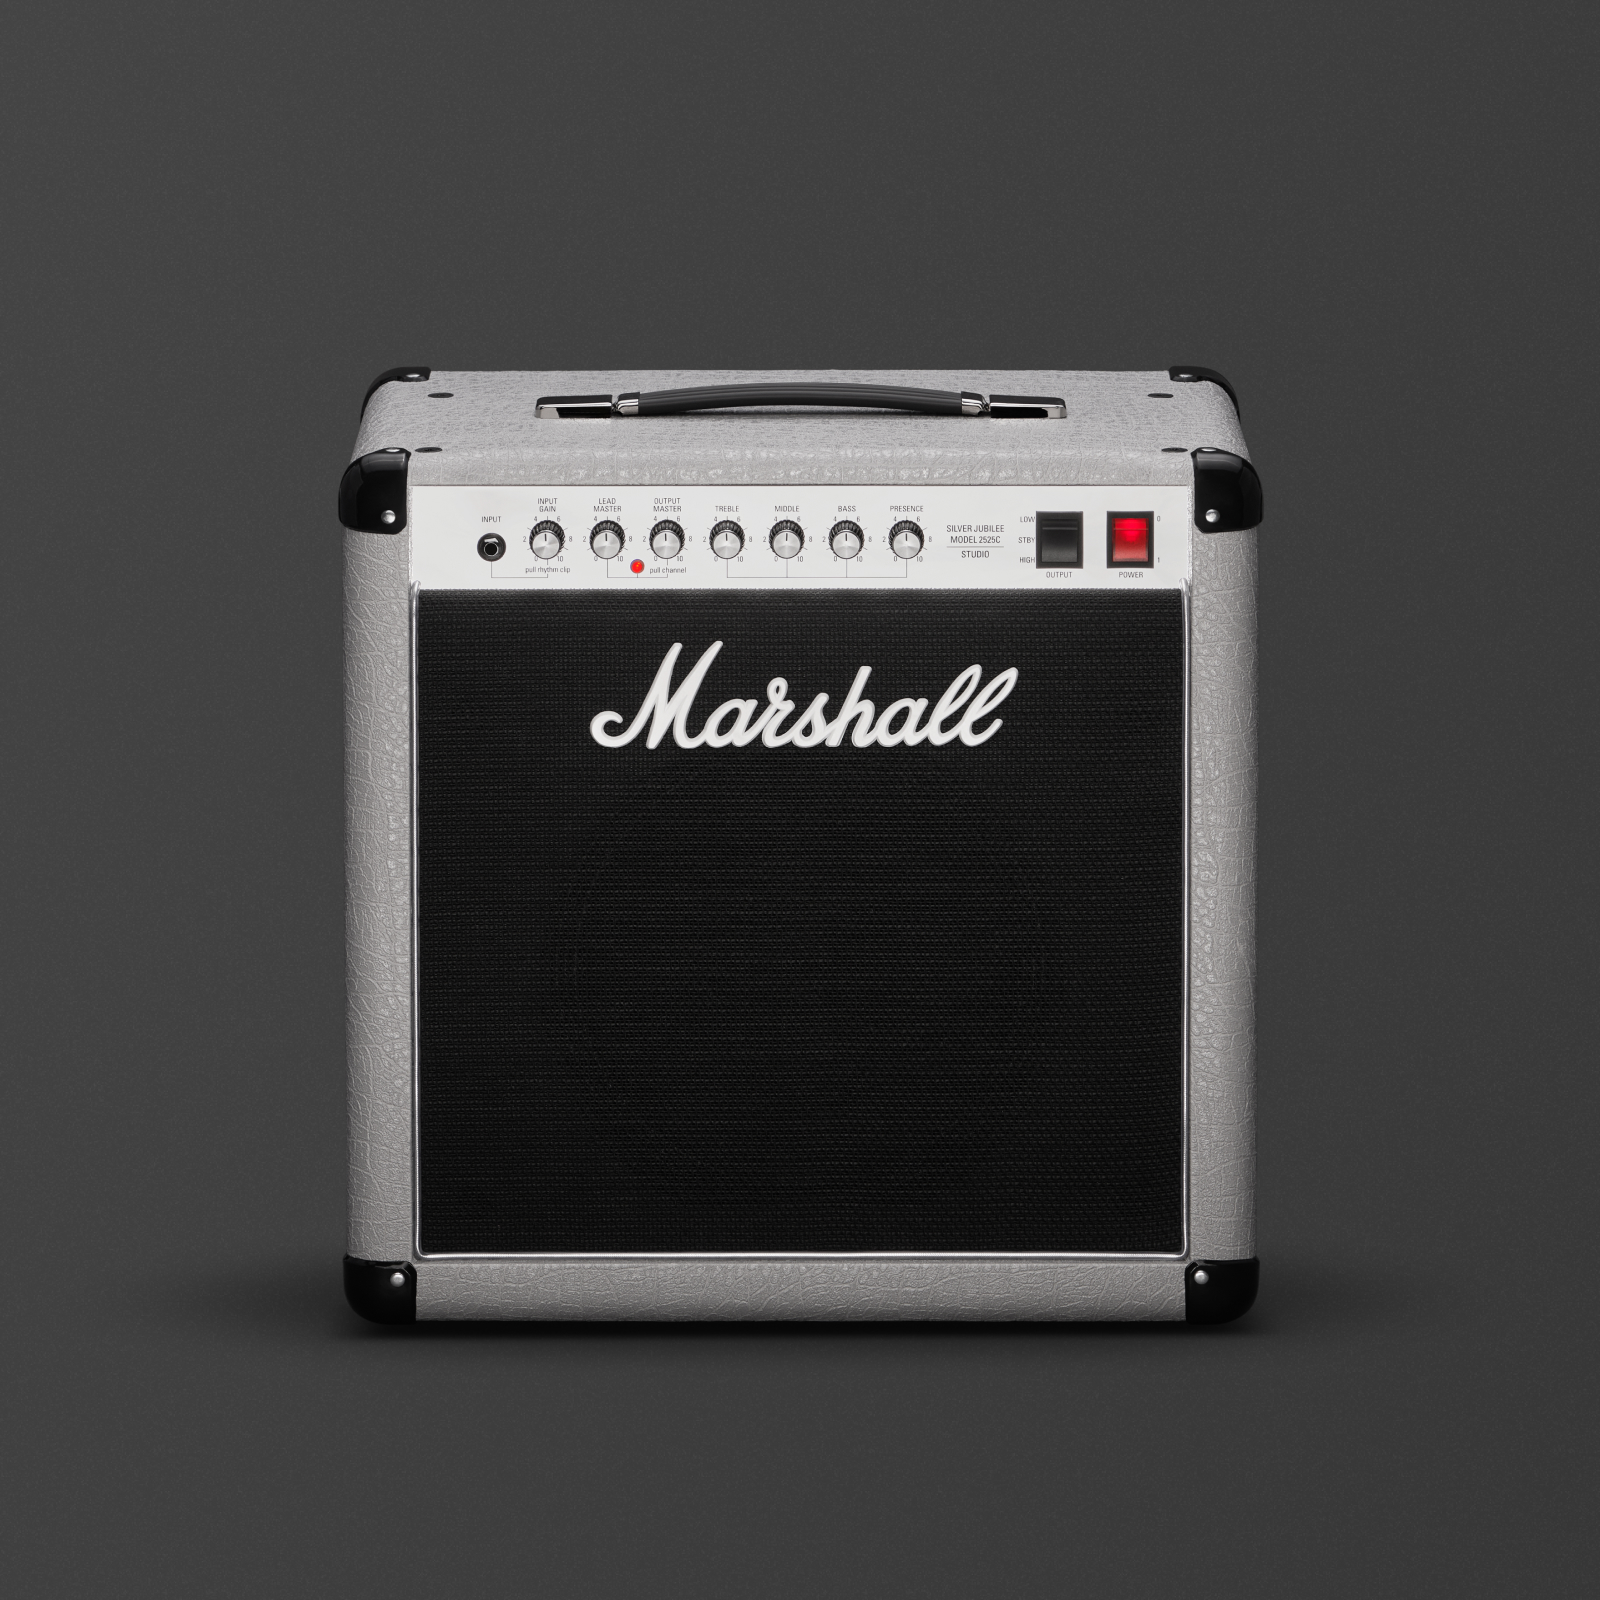 Marshall 2525c en negro y plata